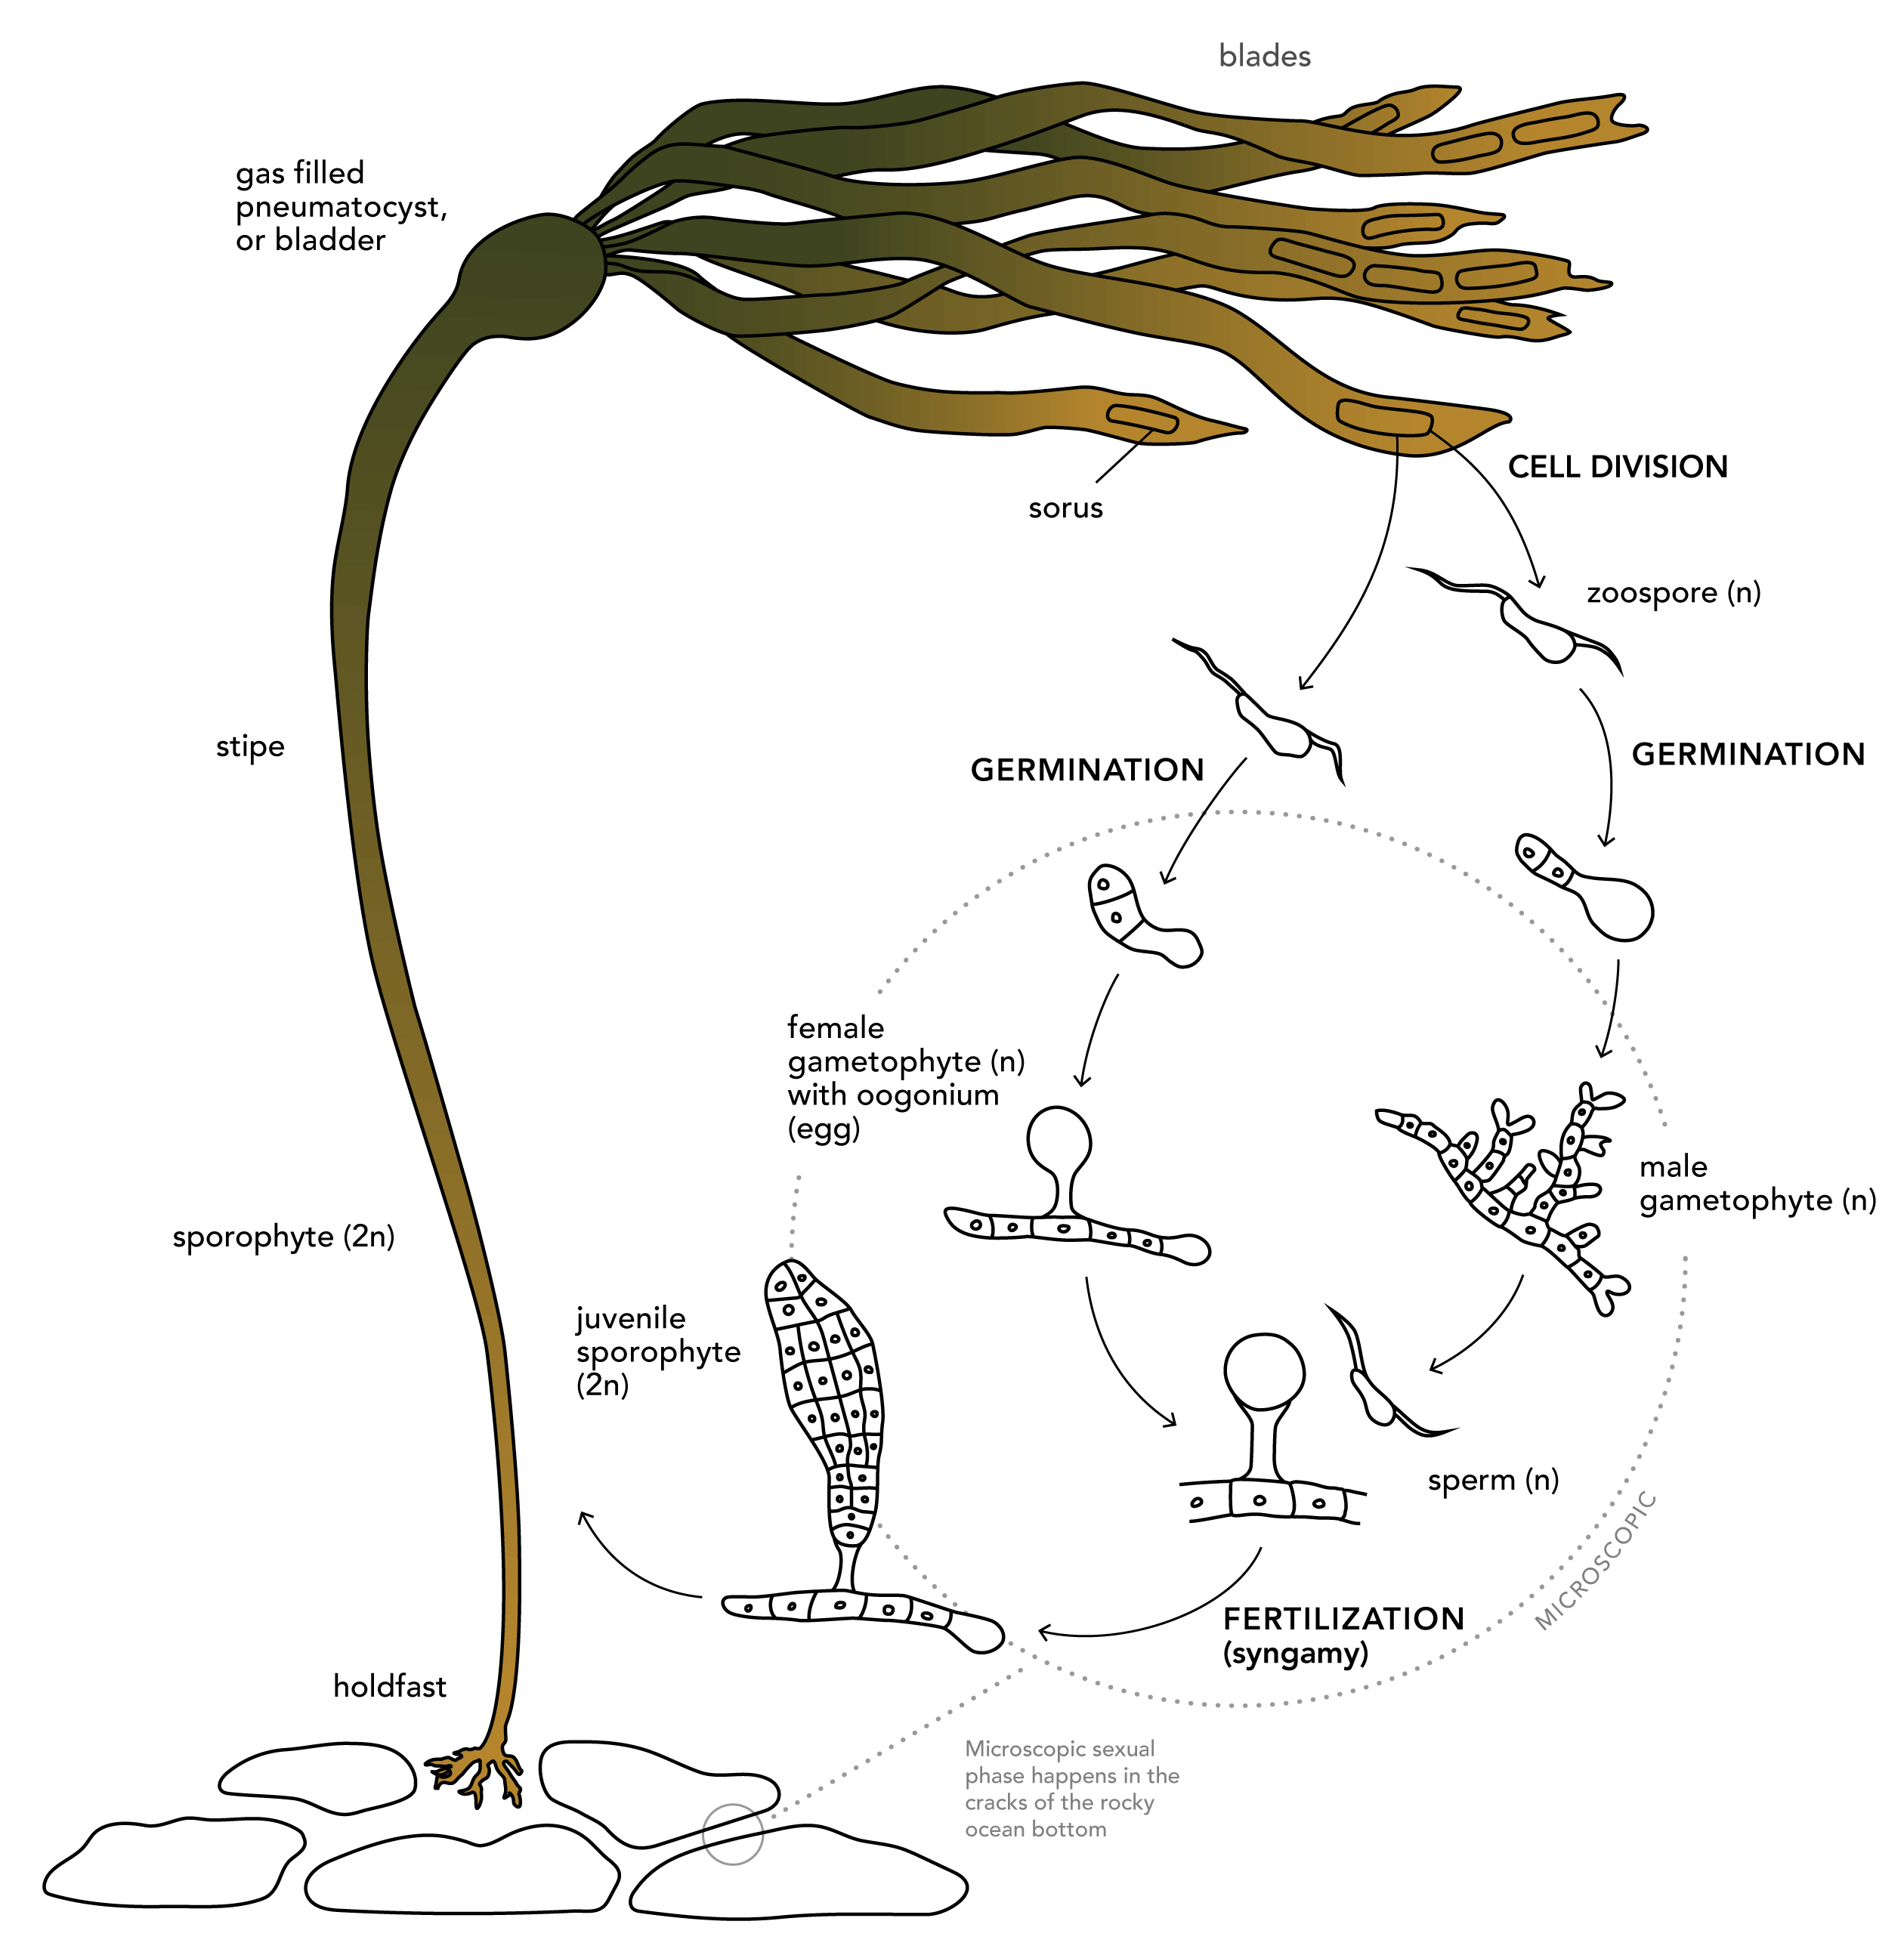 Diagram showing reproduction cycle of Nereocystis luetkeana